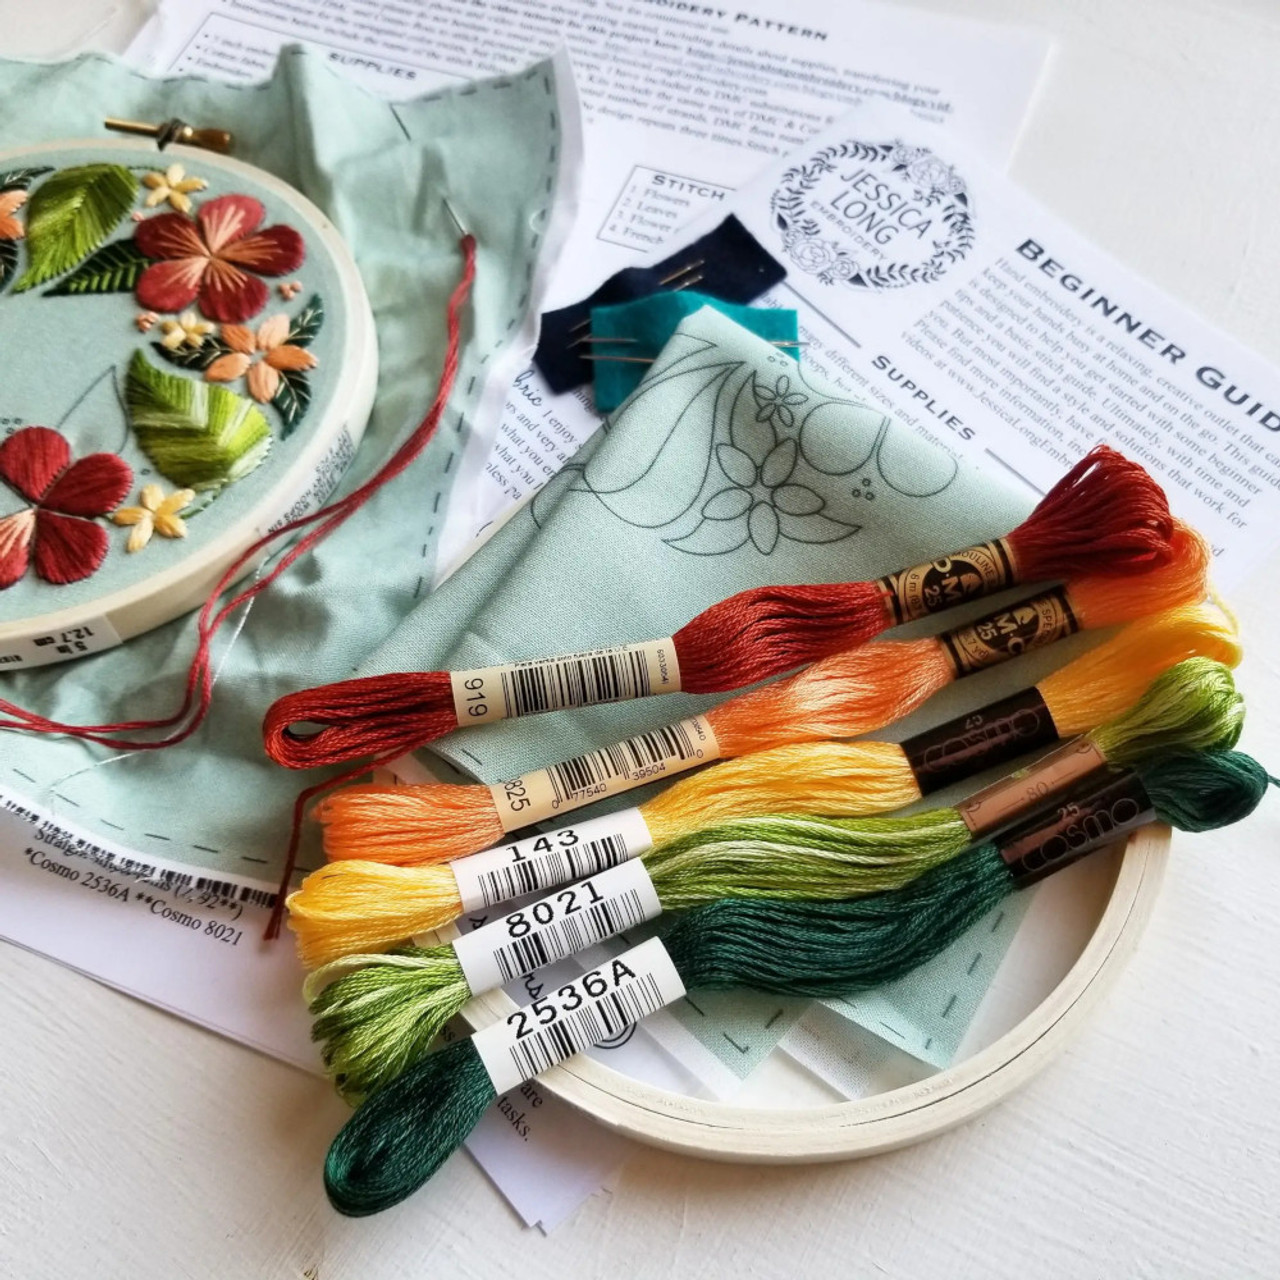 Floral Flourish Beginner Embroidery Kit